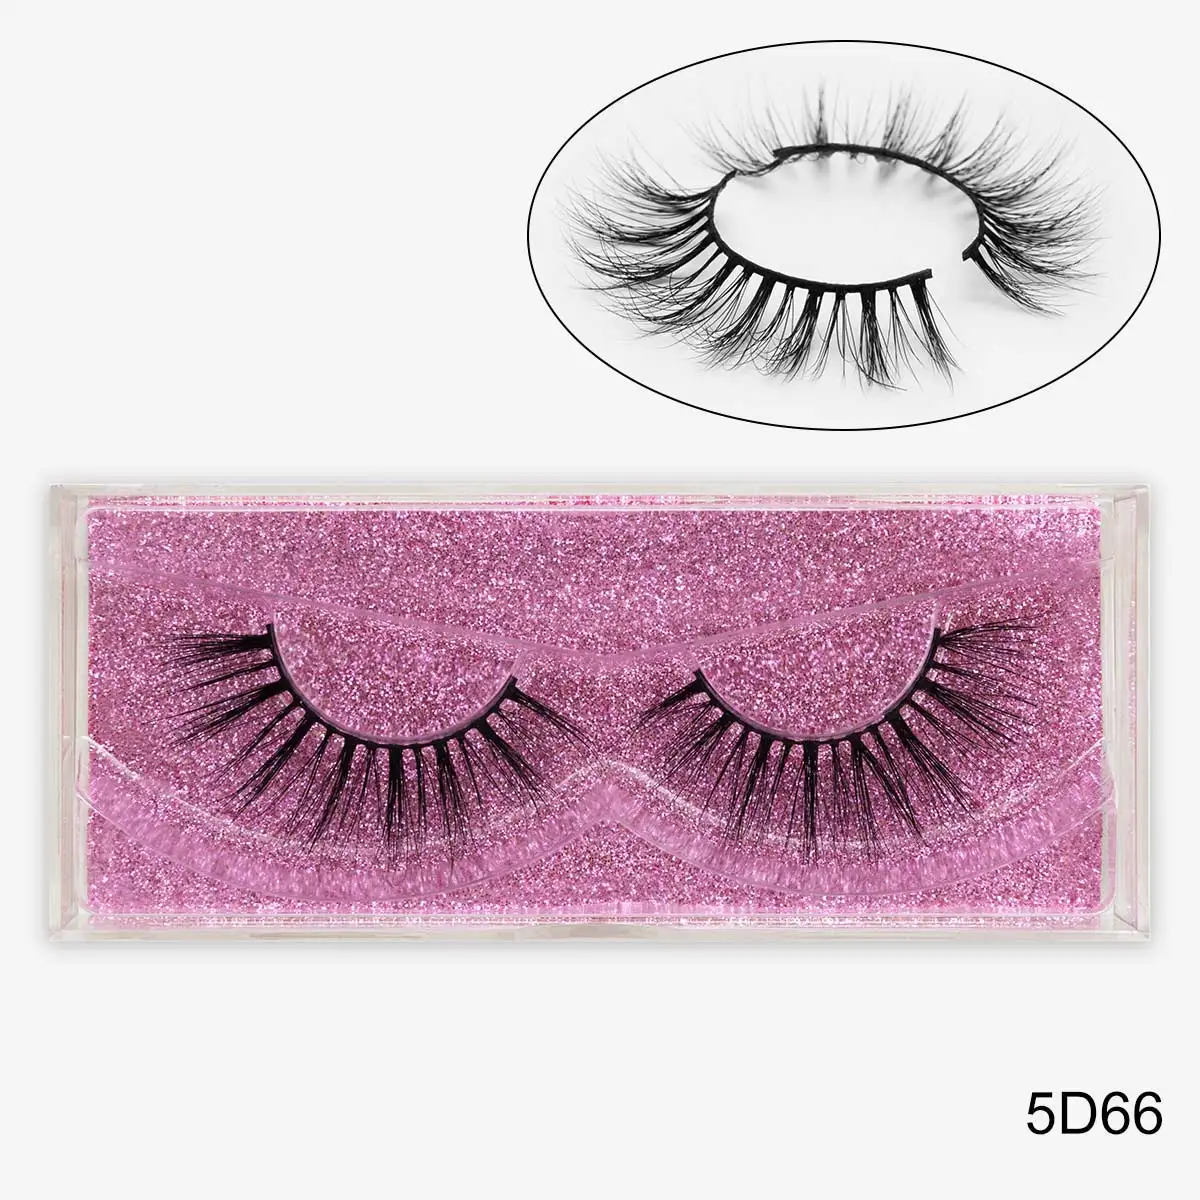 SEXYSHEEP Mink Lashes 3D Mink Eyelashes Cruelty free Lashes Handmade Reusable Natural Eyelashes False Lashes Makeup - Цвет: 5D66